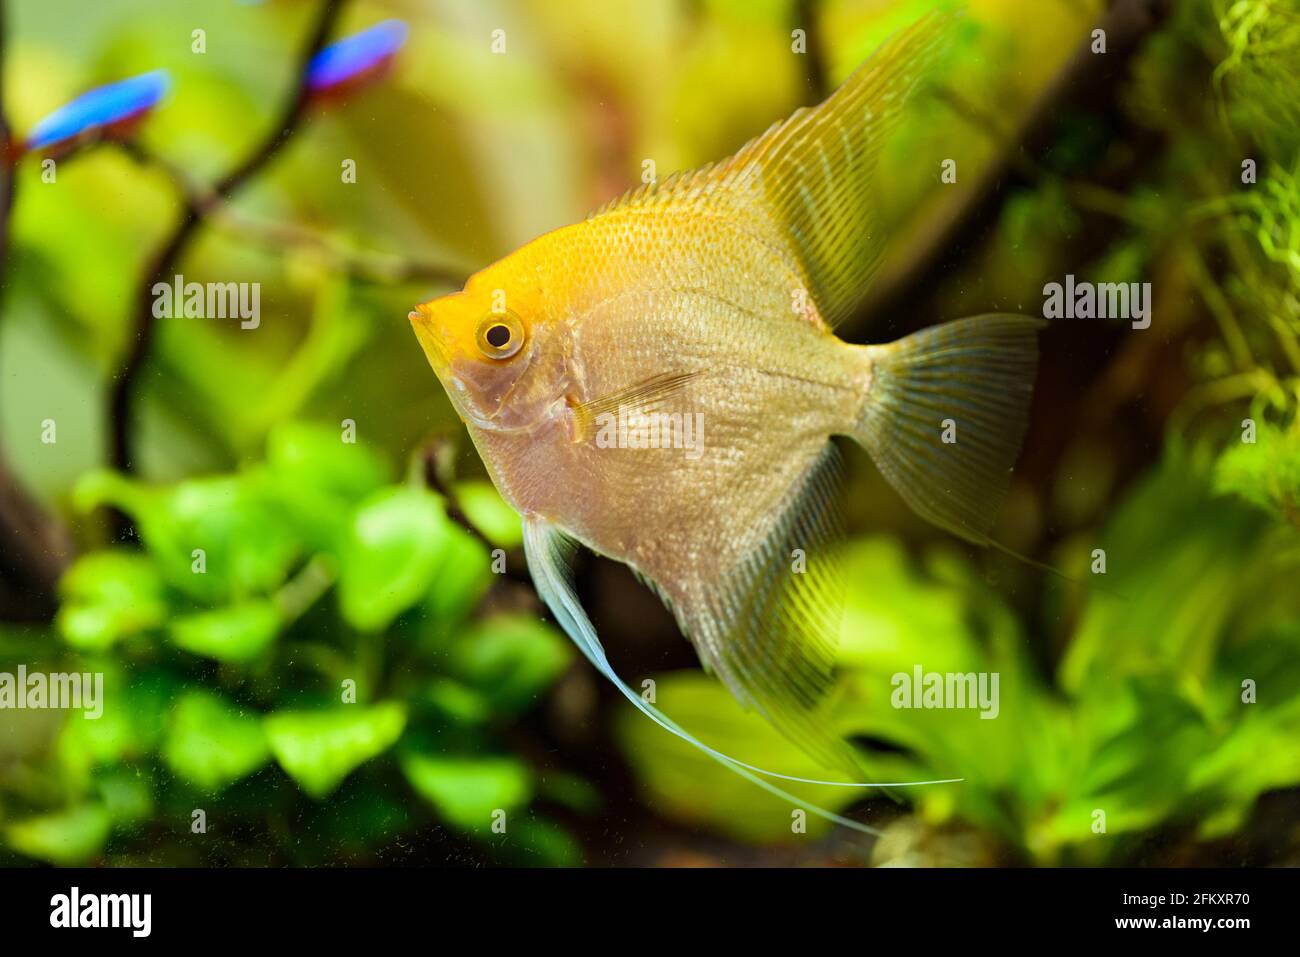 Pterophyllum Scalare in aqarium water, yellow angelfish Stock Photo